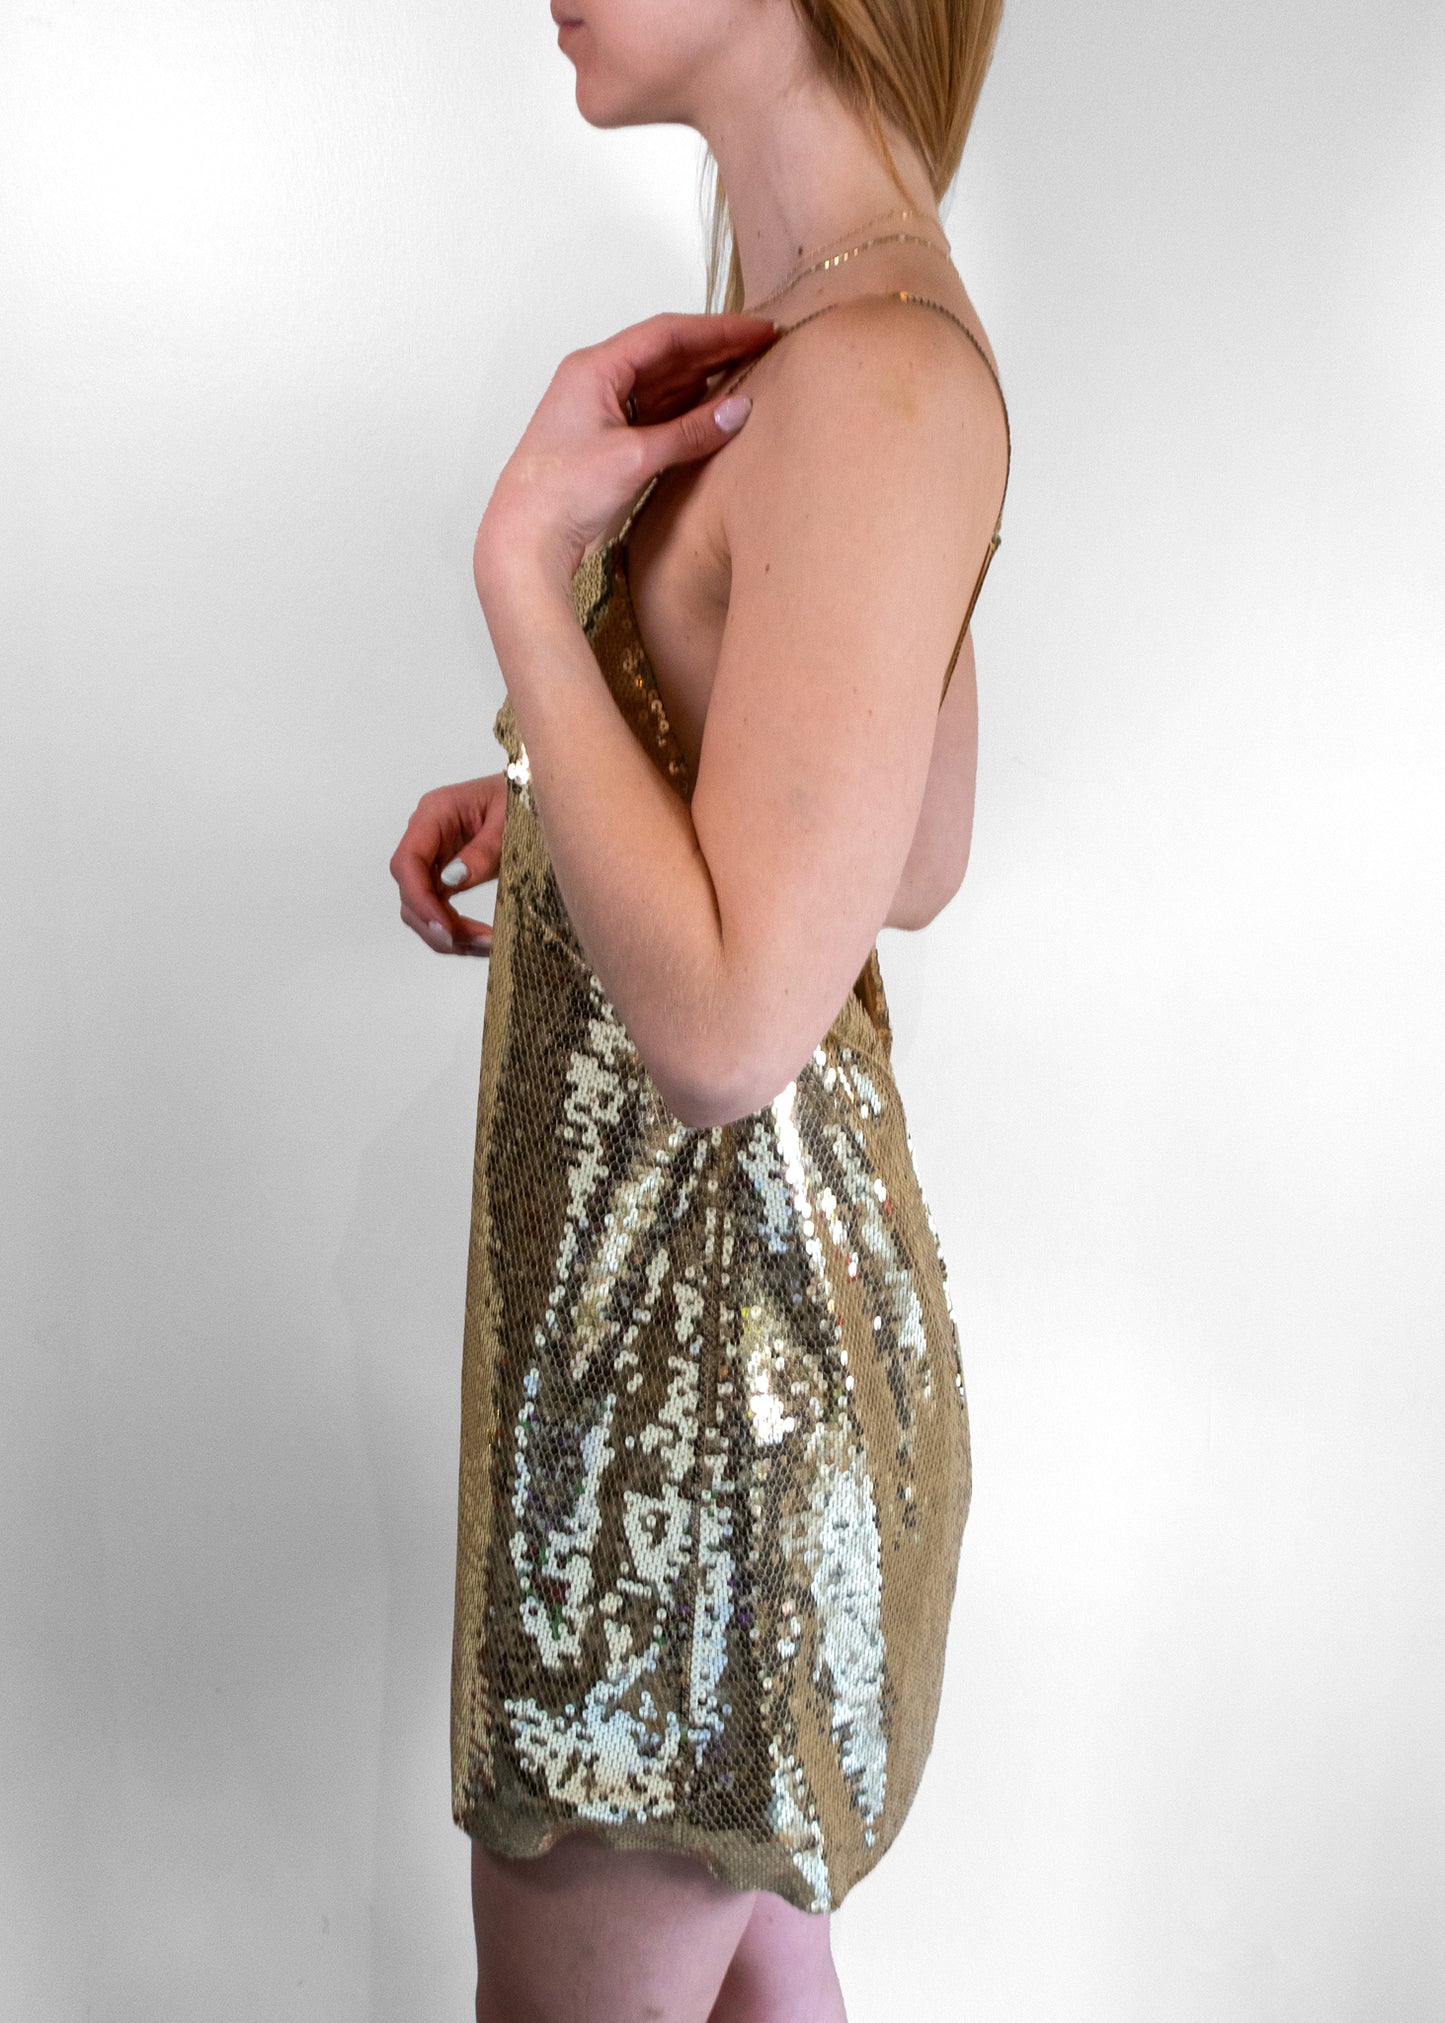 Celine Gold Sequin Mini Dress